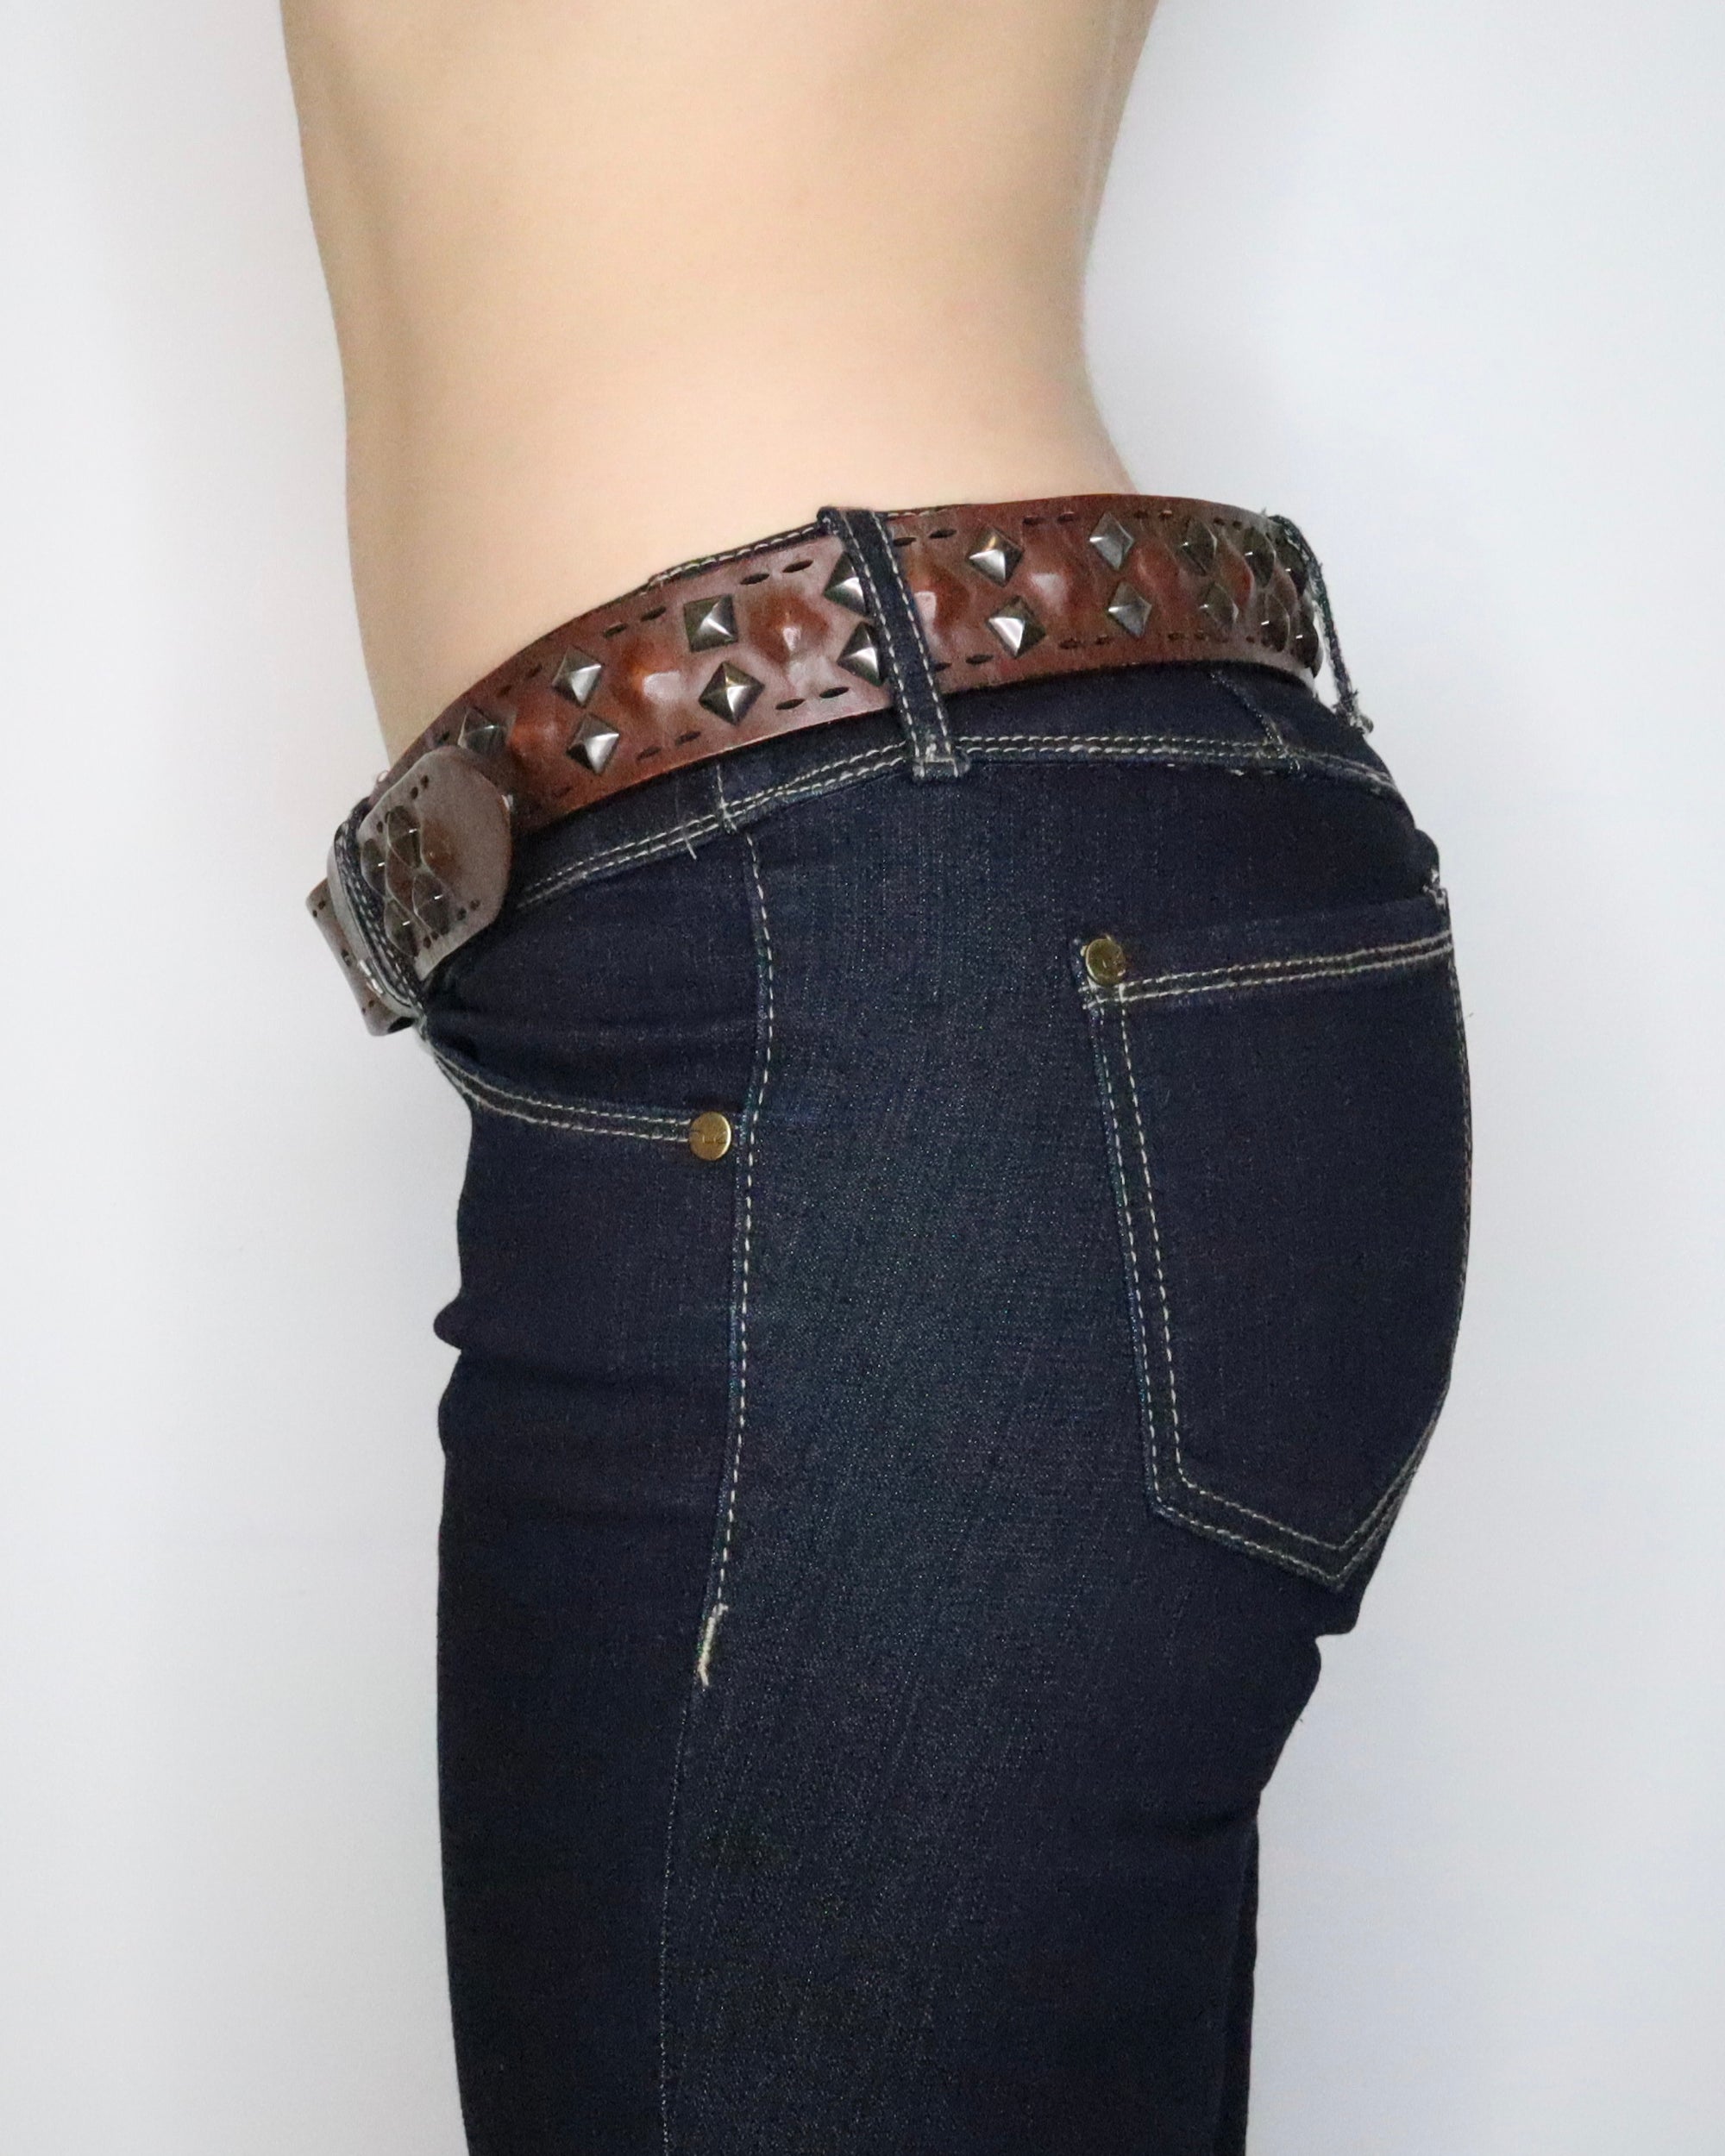 John Varvatos Studded Leather Belt (M-L) 